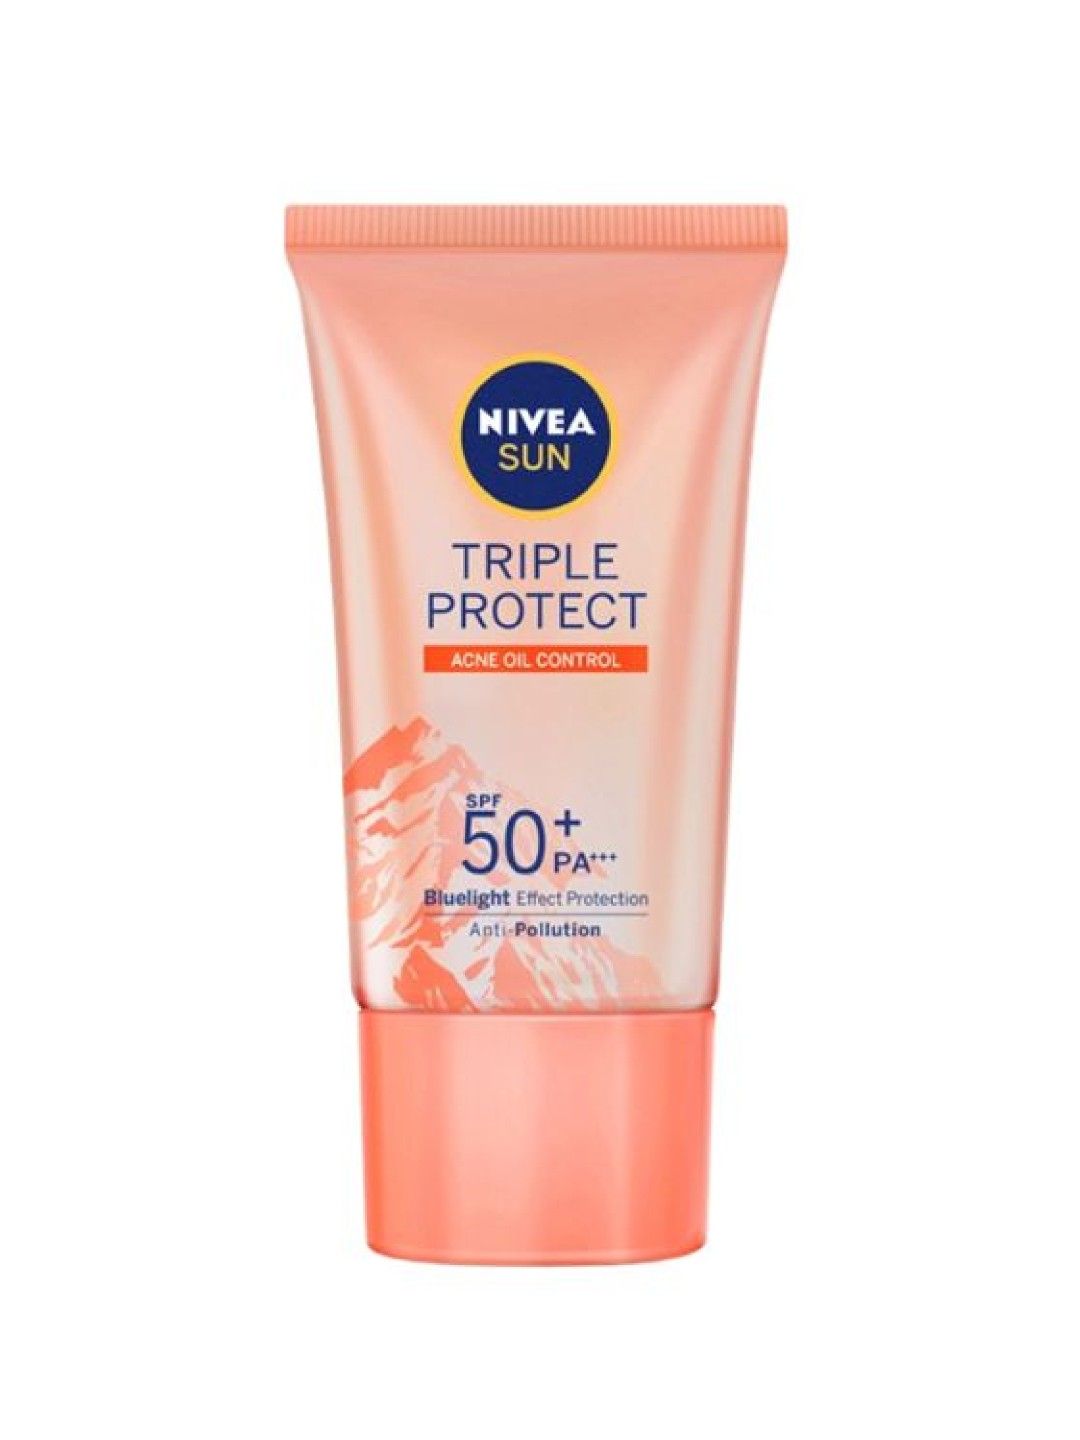 NIVEA Sun Triple Protect Oil Control Sunscreen SPF 50 w/ Bluelight Protection, 40ml